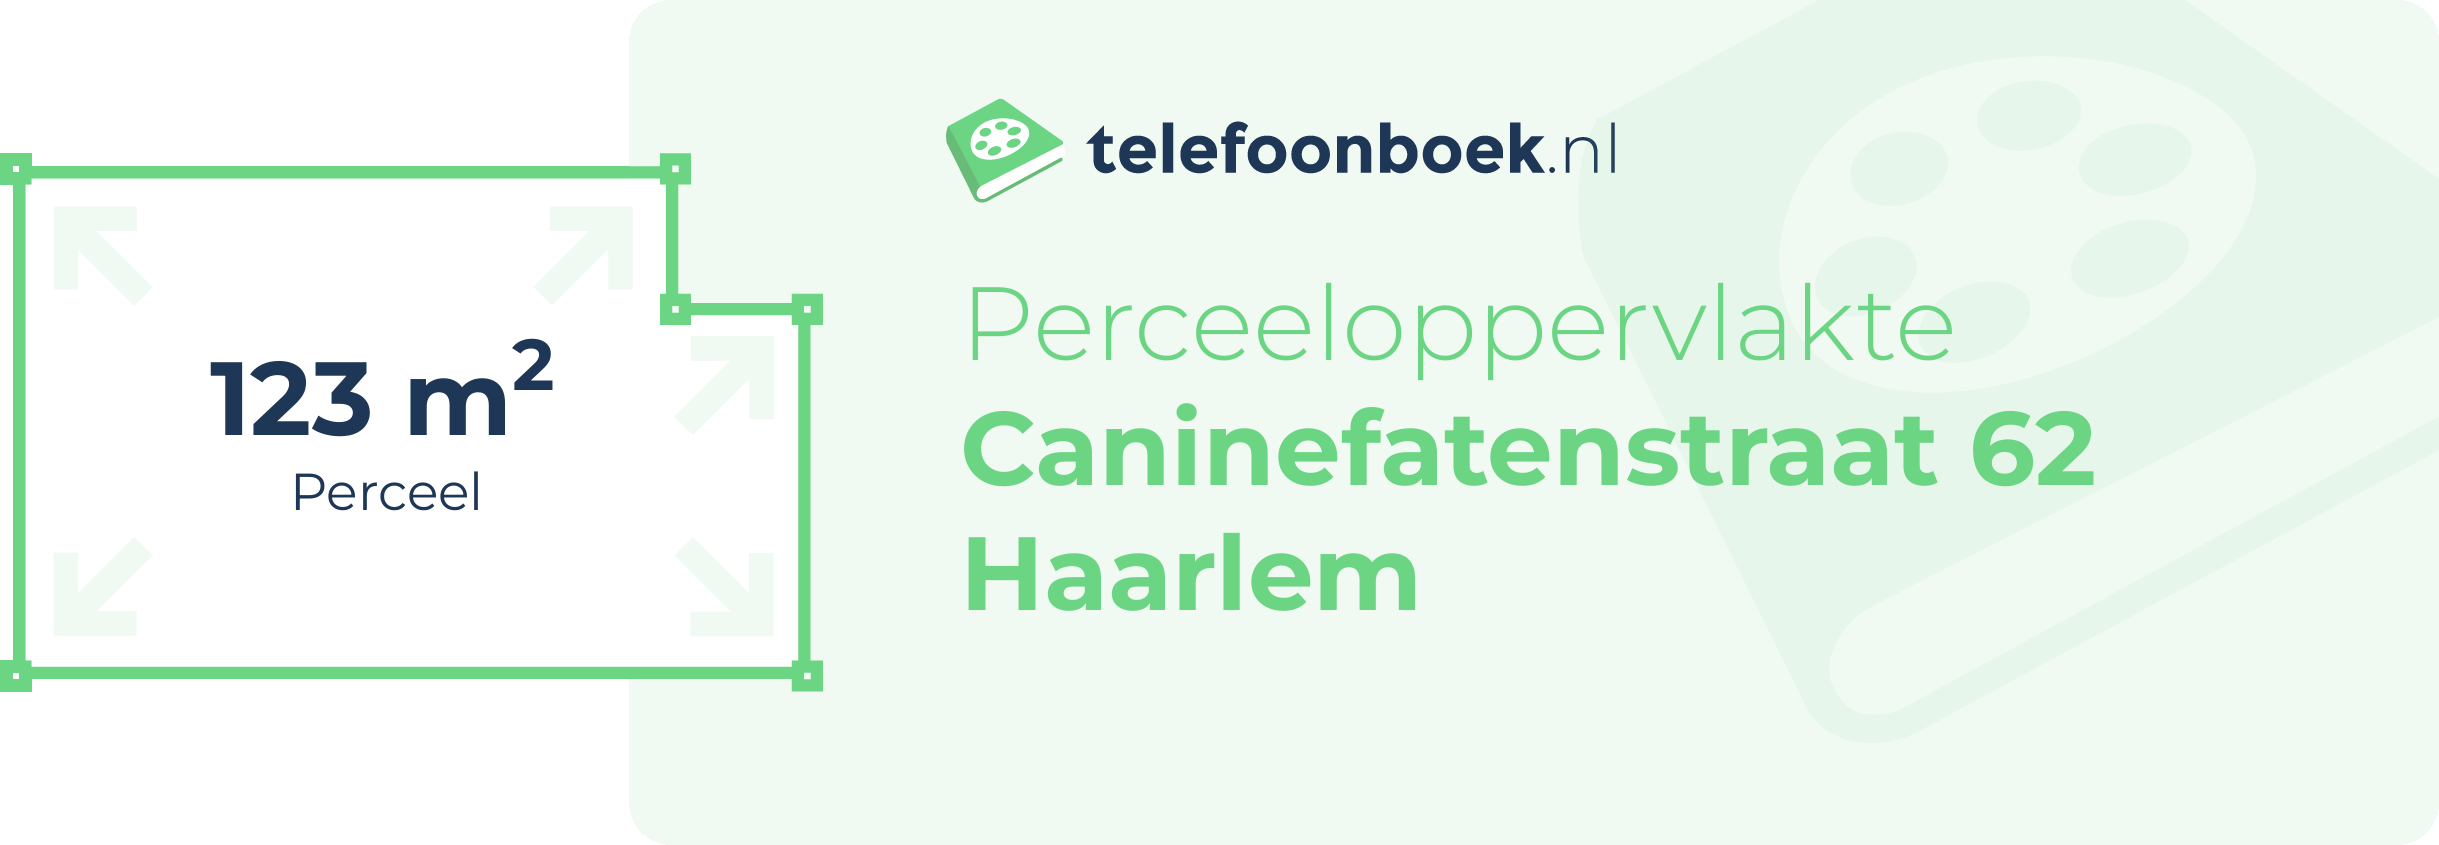 Perceeloppervlakte Caninefatenstraat 62 Haarlem